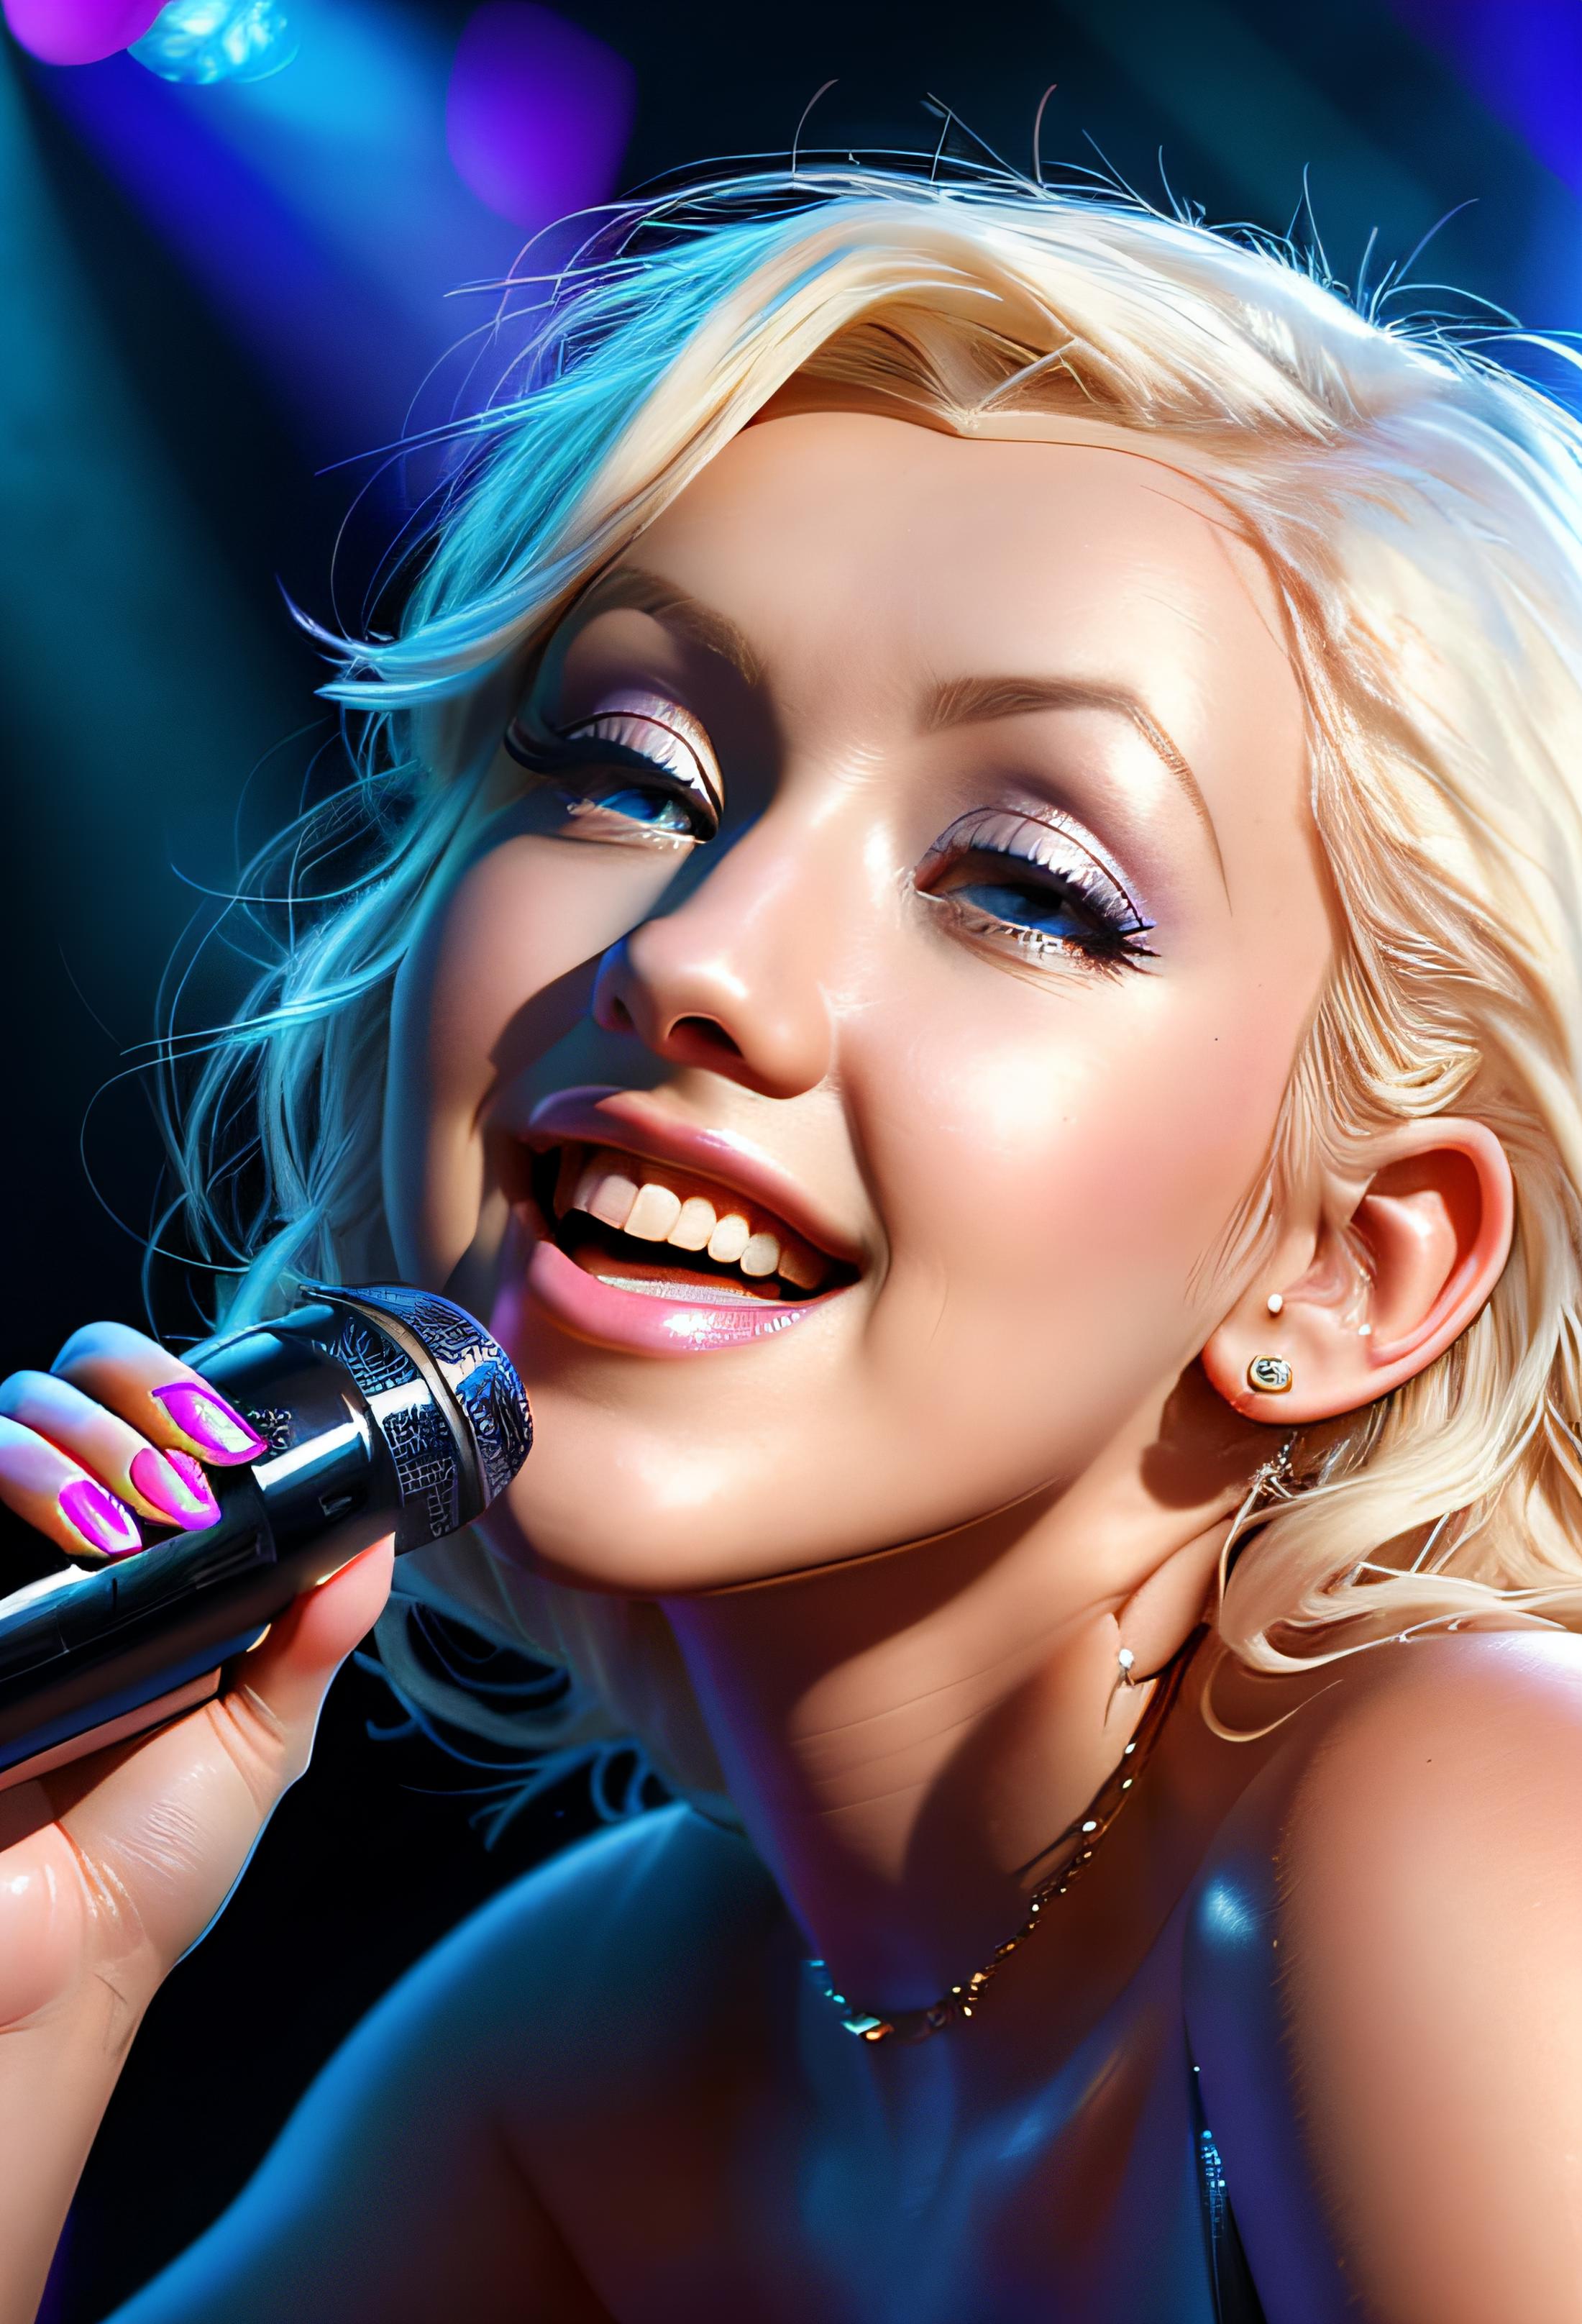 Christina Aguilera image by frankyfrank2k